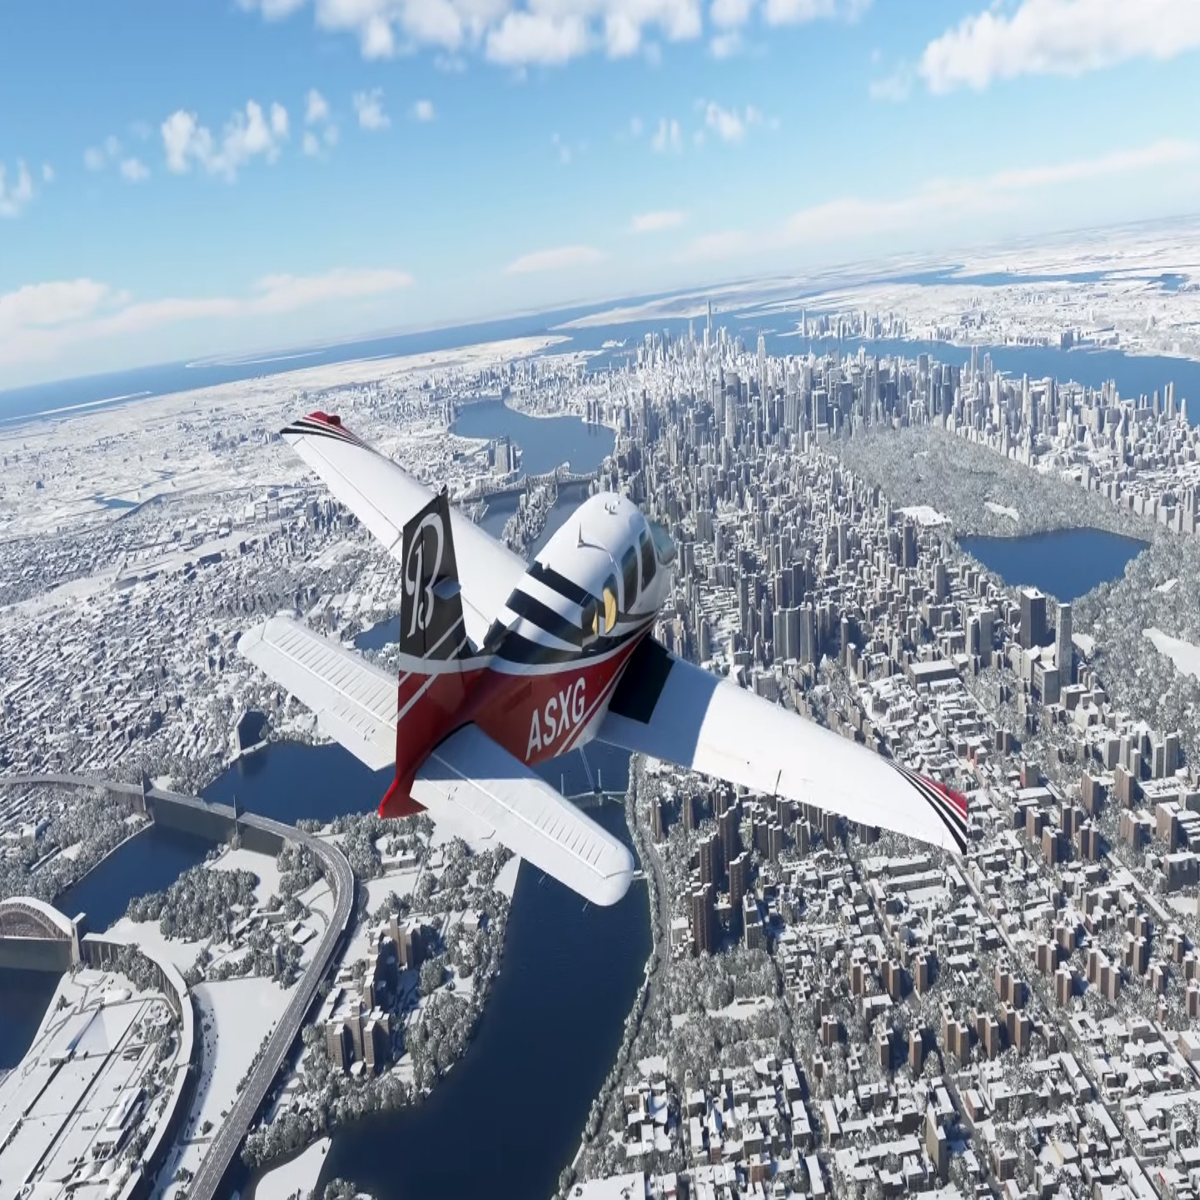 Microsoft Flight Simulator 2020 - FULL Aircraft List 